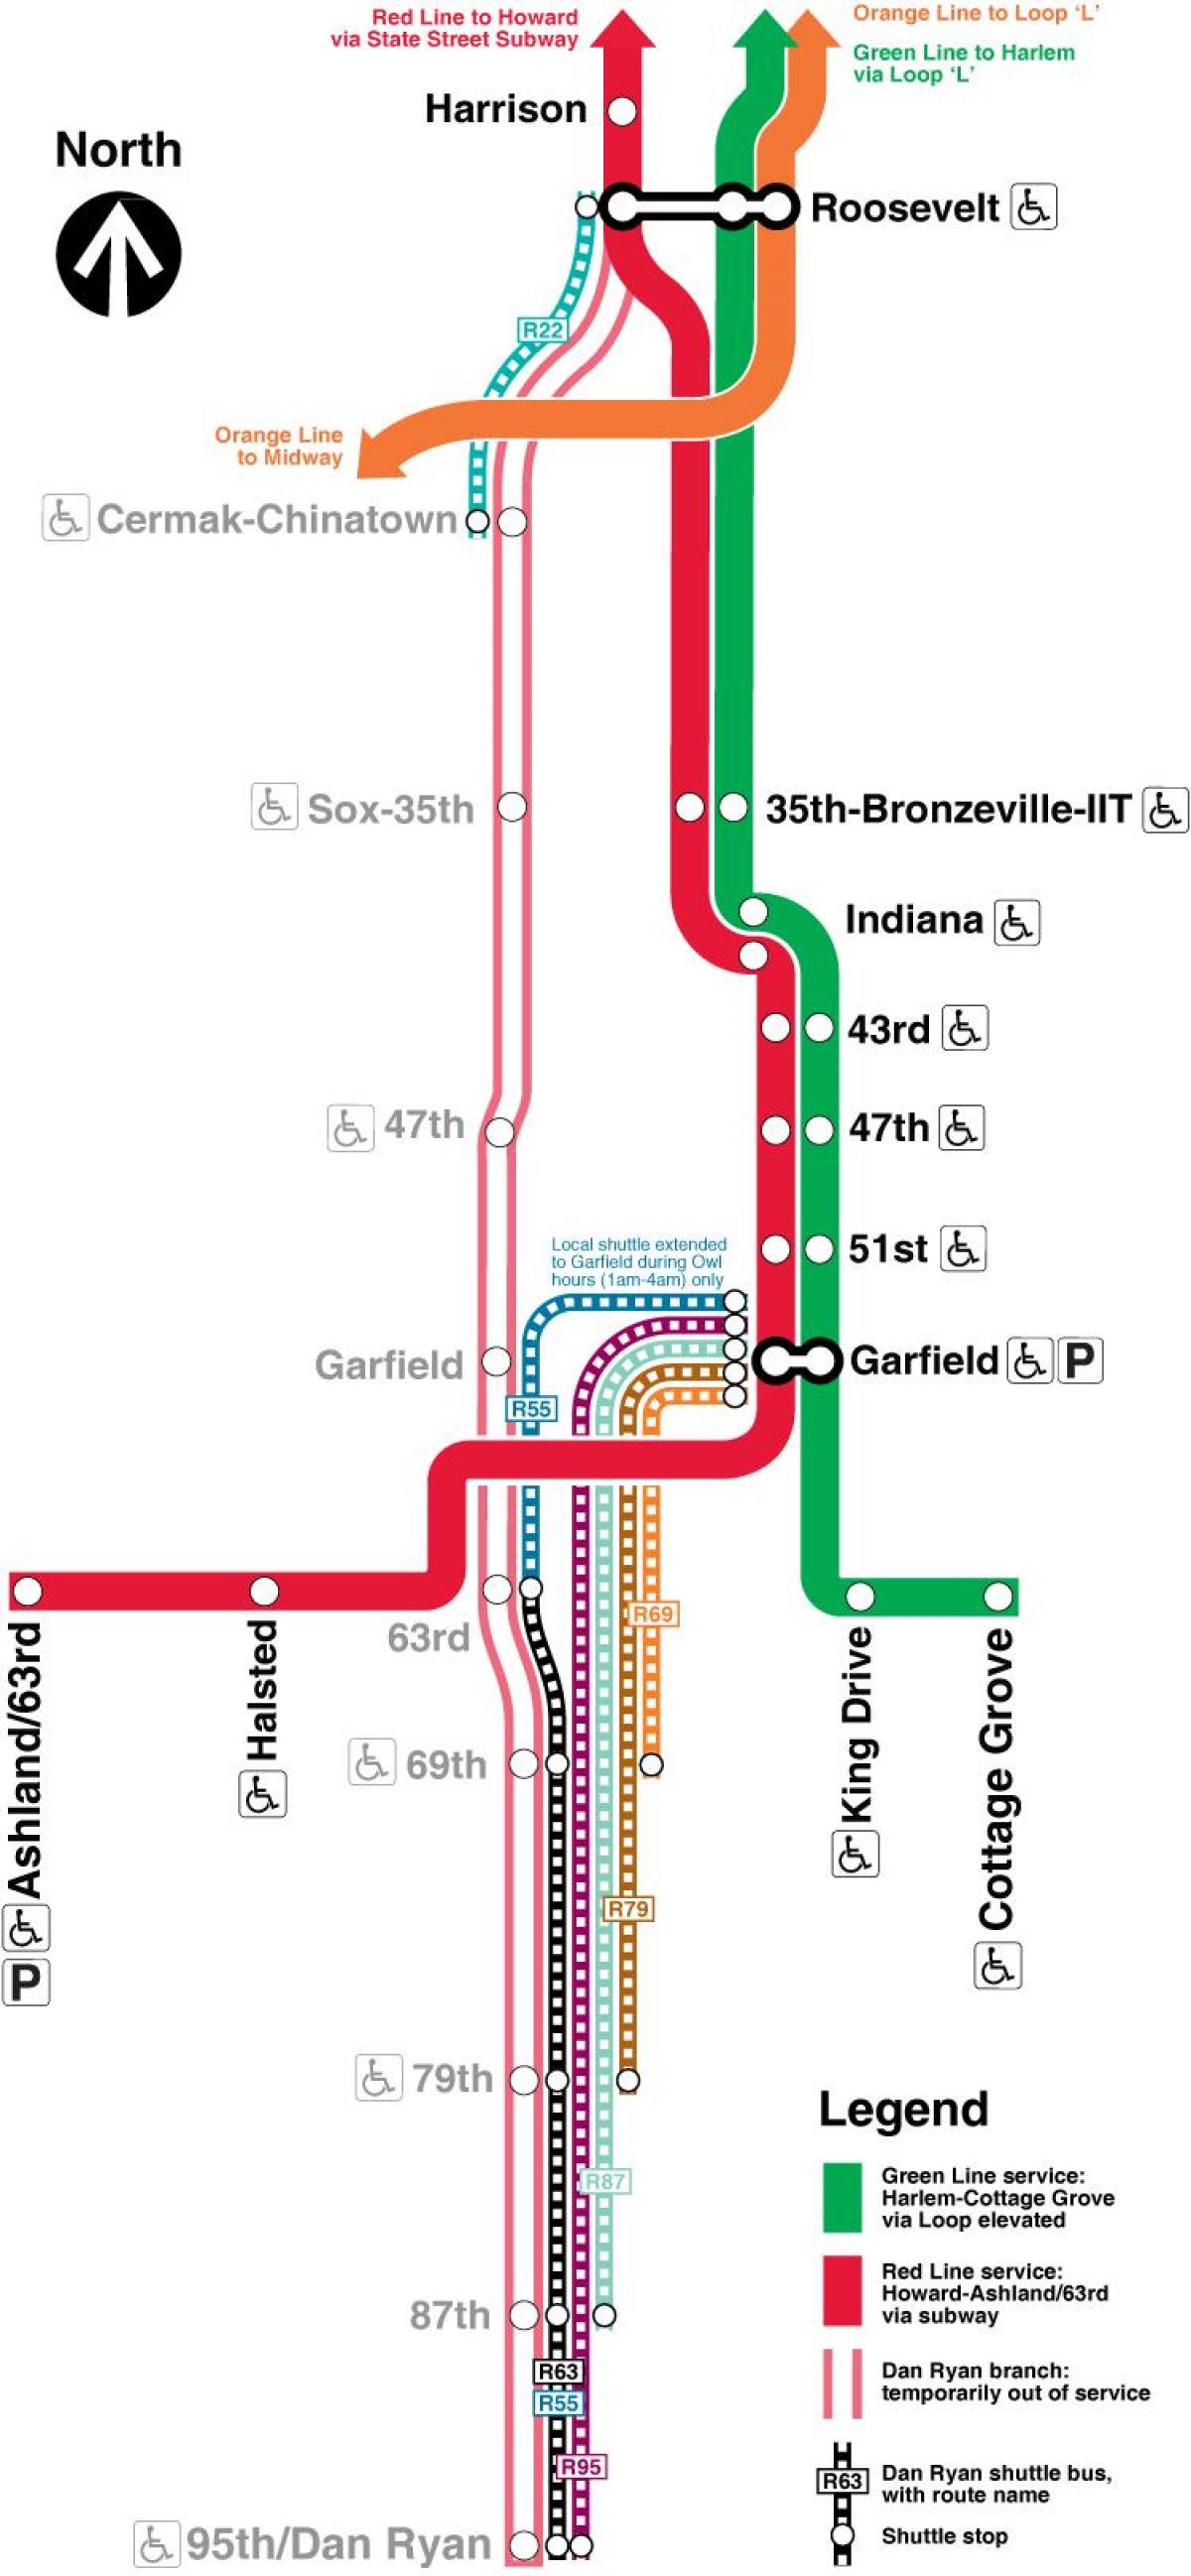 Chicago cta خط قرمز نقشه